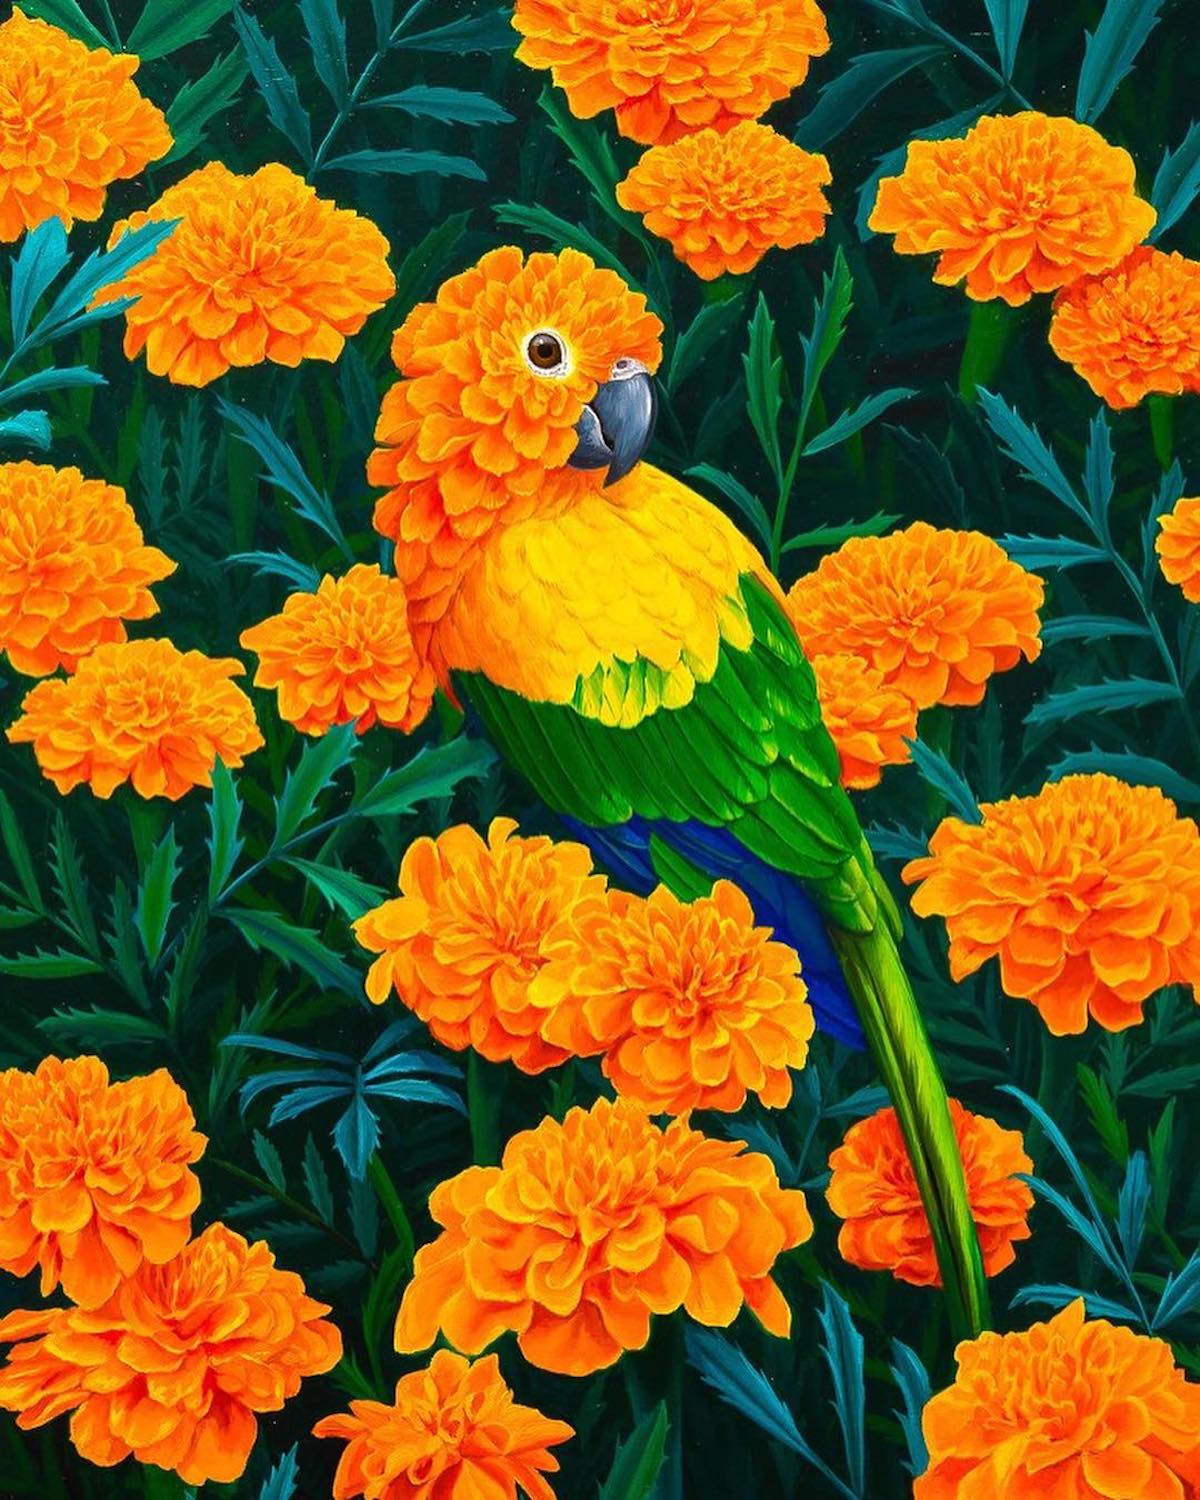 Pinturas de pájaros surrealistas por Jon Ching